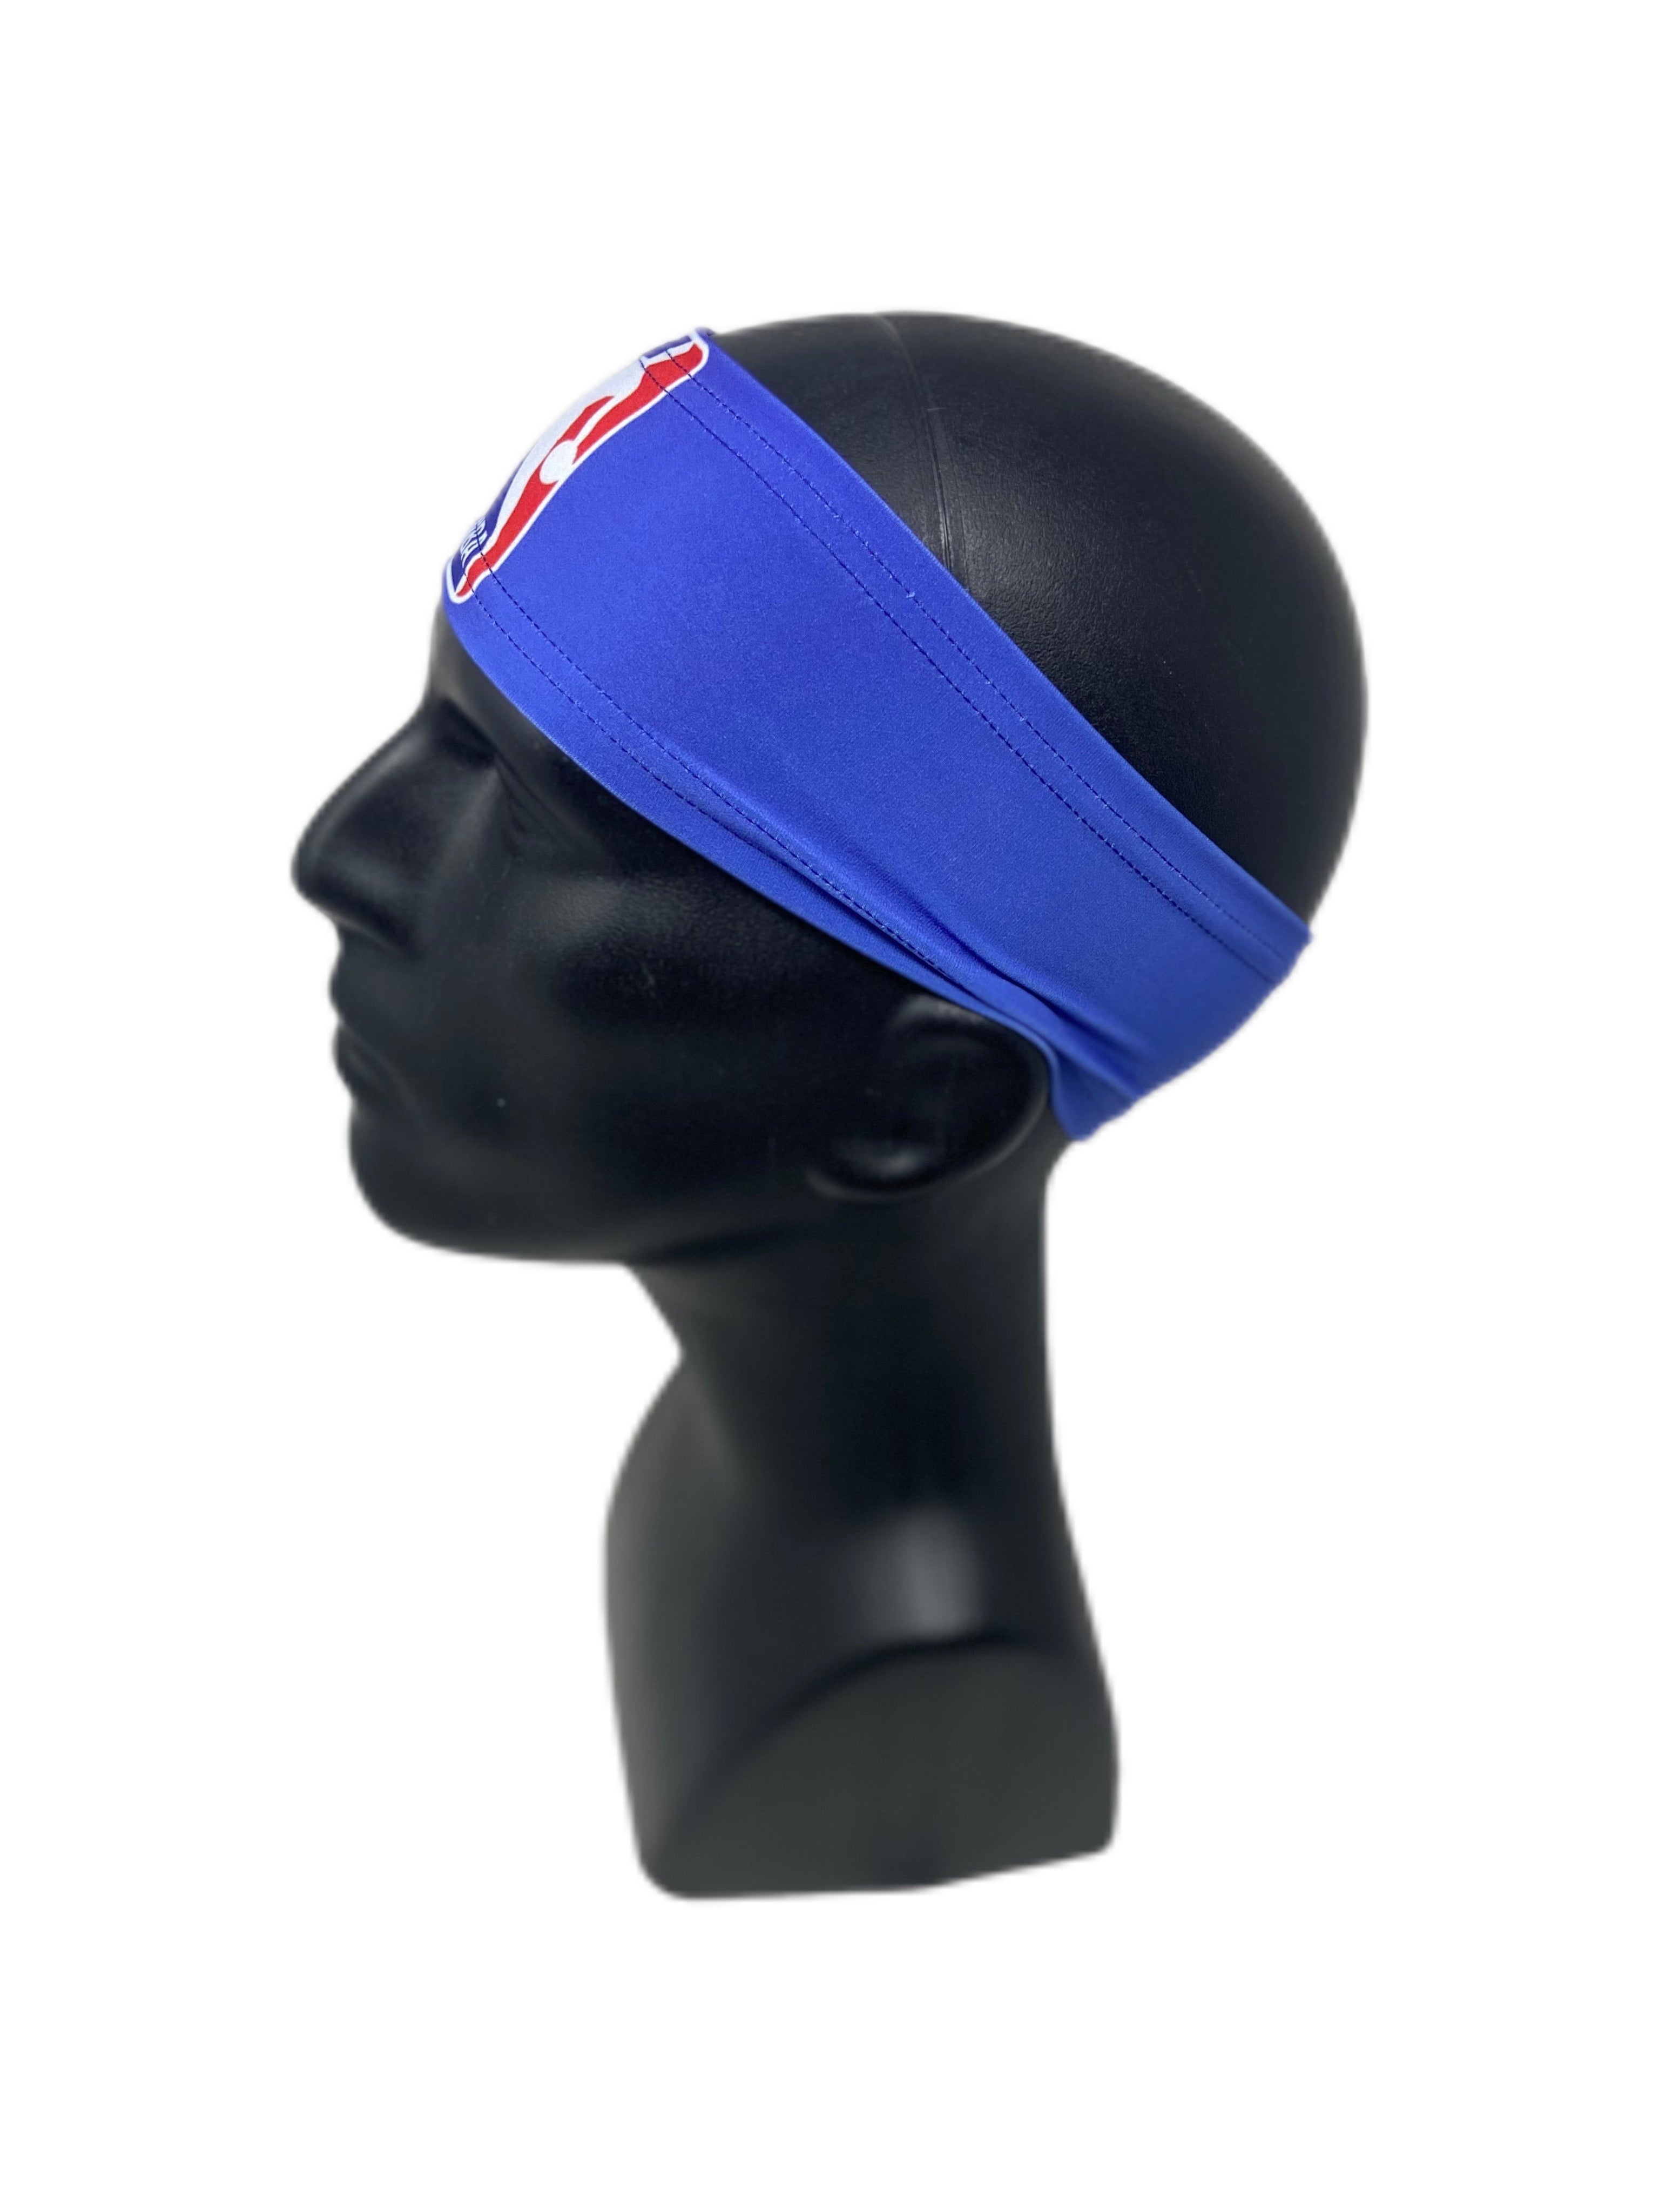 NBA Logo Headband - Double R Rags